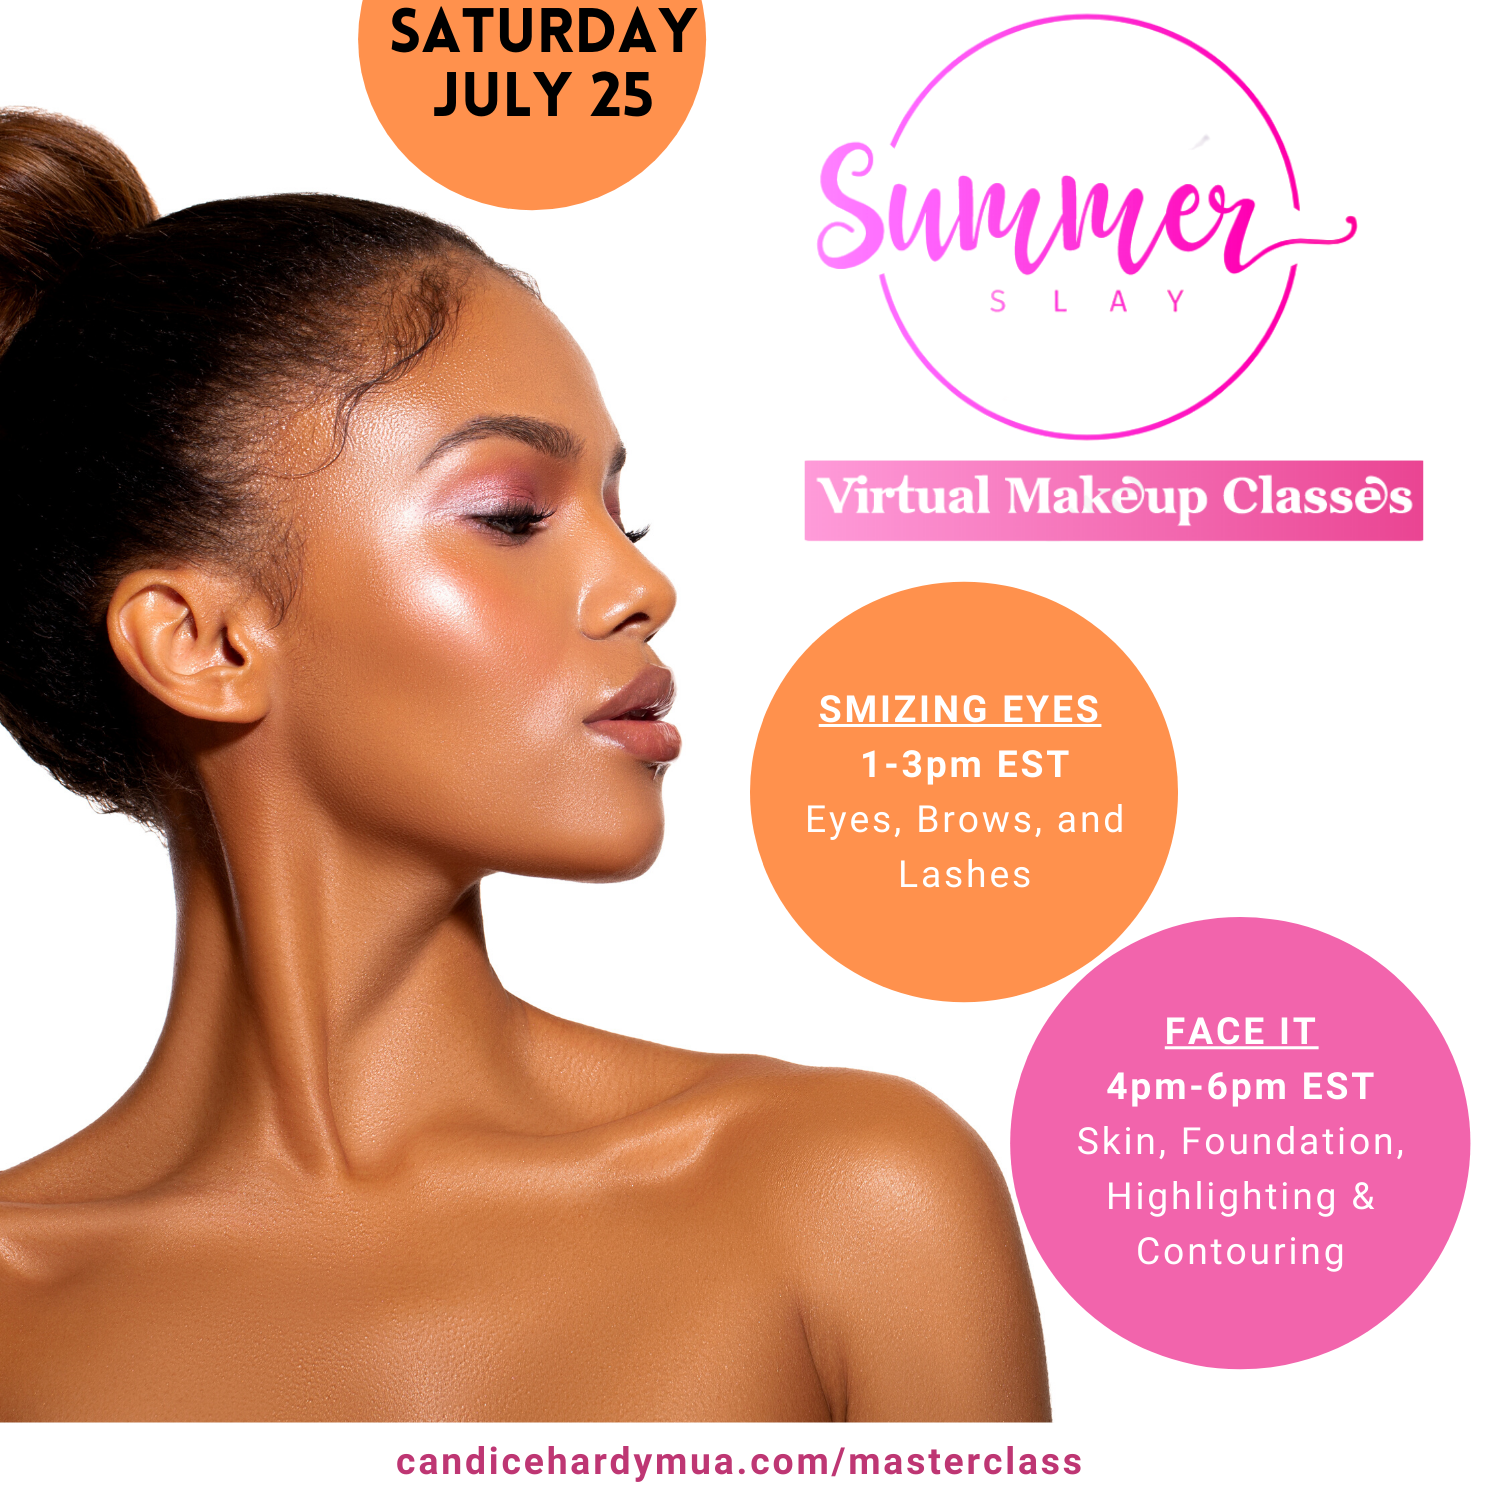 Summer Slay Virtual Makeup Classes